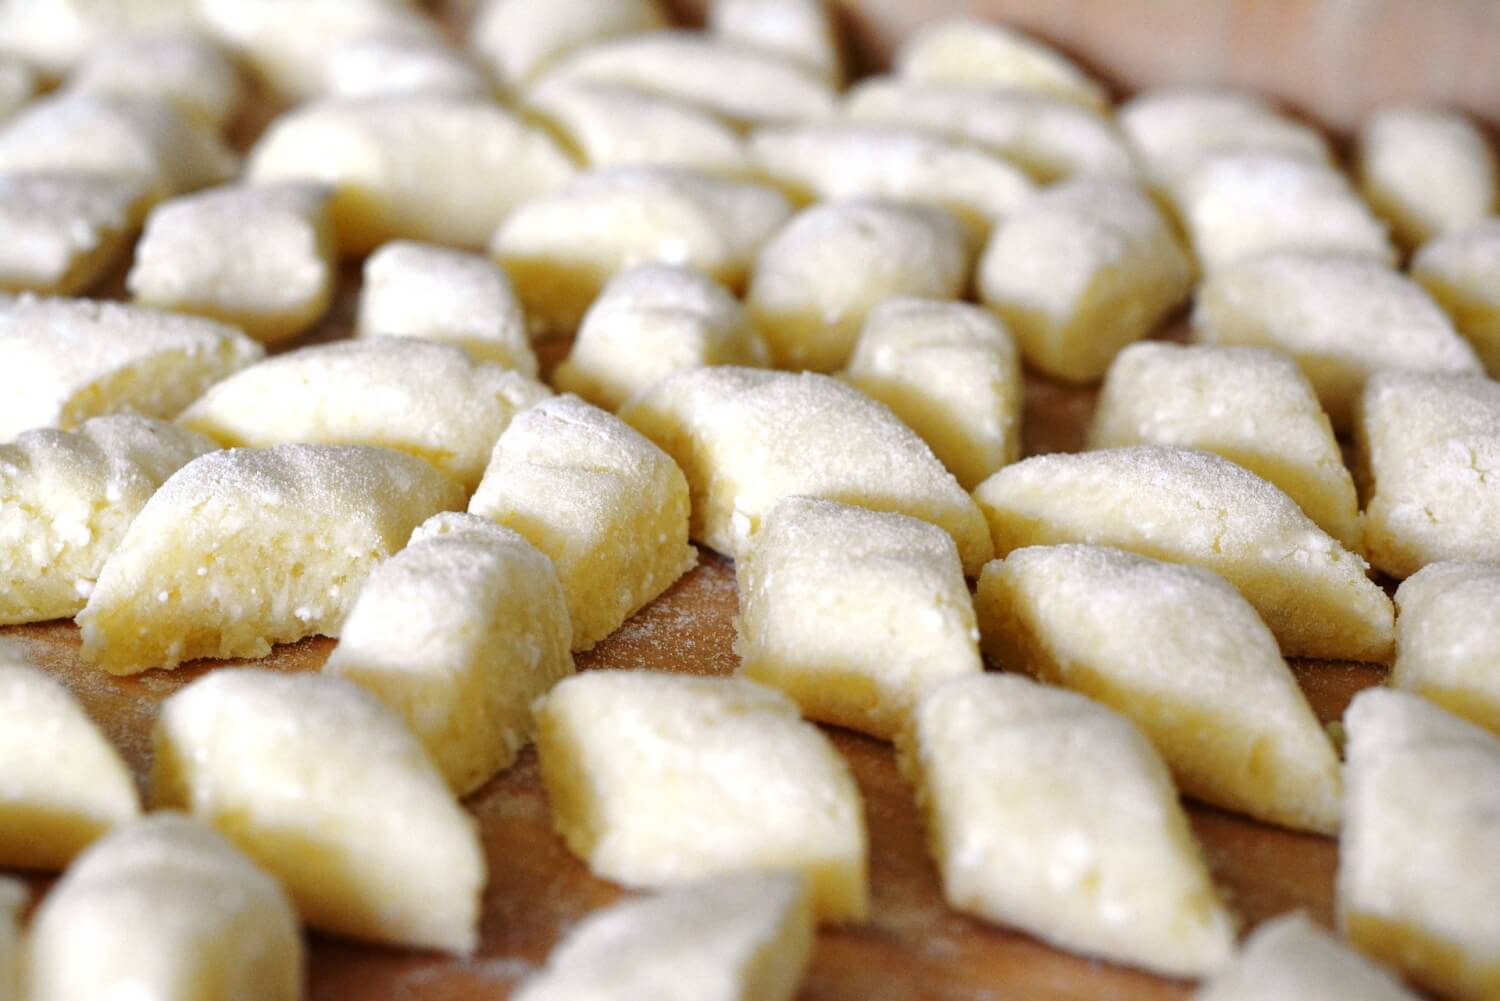 Kopytka, little Polish dumplings made from potato and shaped like little hooves.